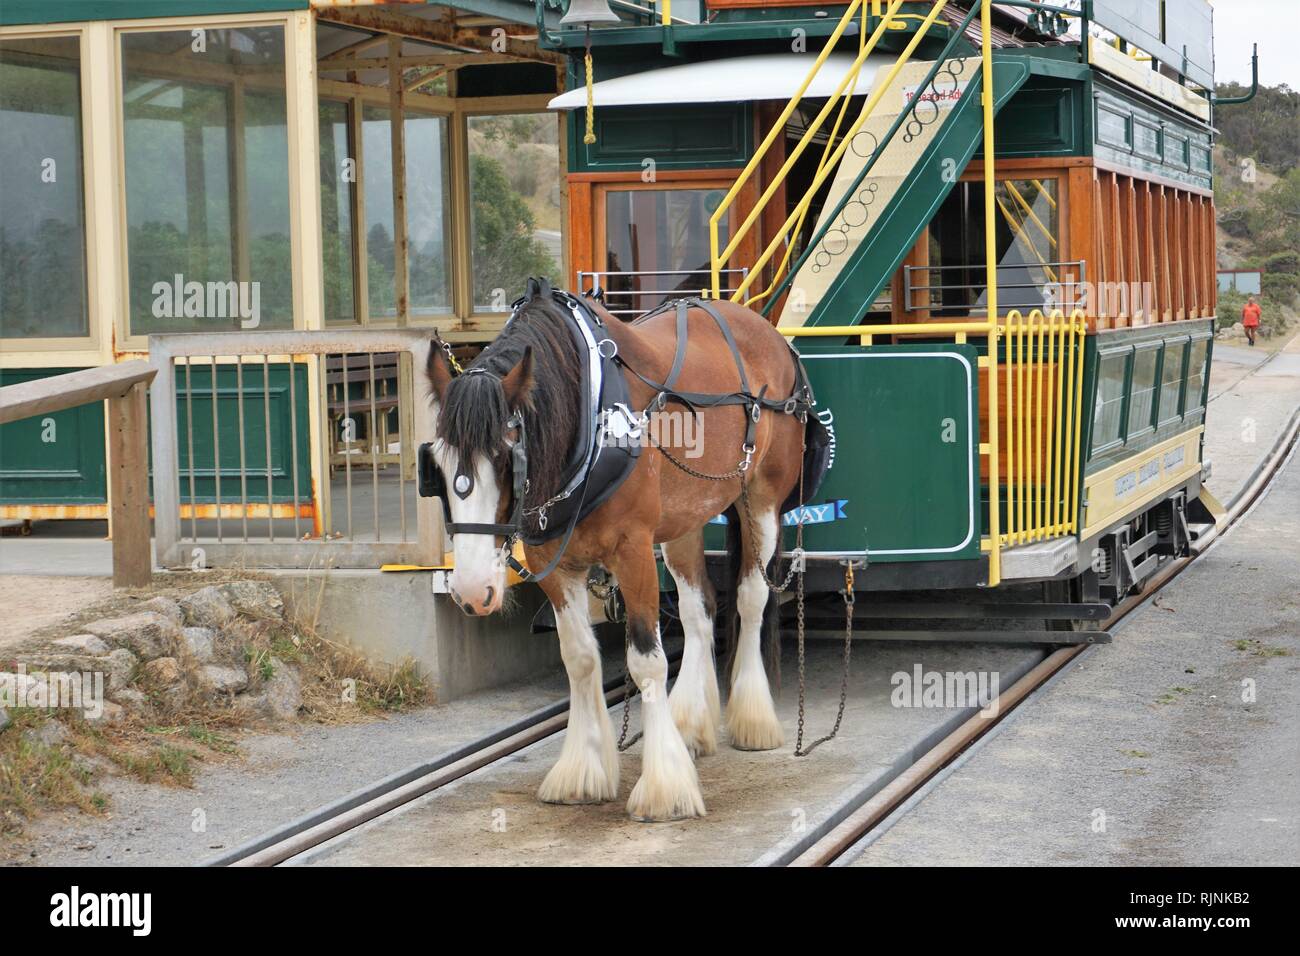 Horse drawn tram in Victor Harbor, South Australia Stock Photo